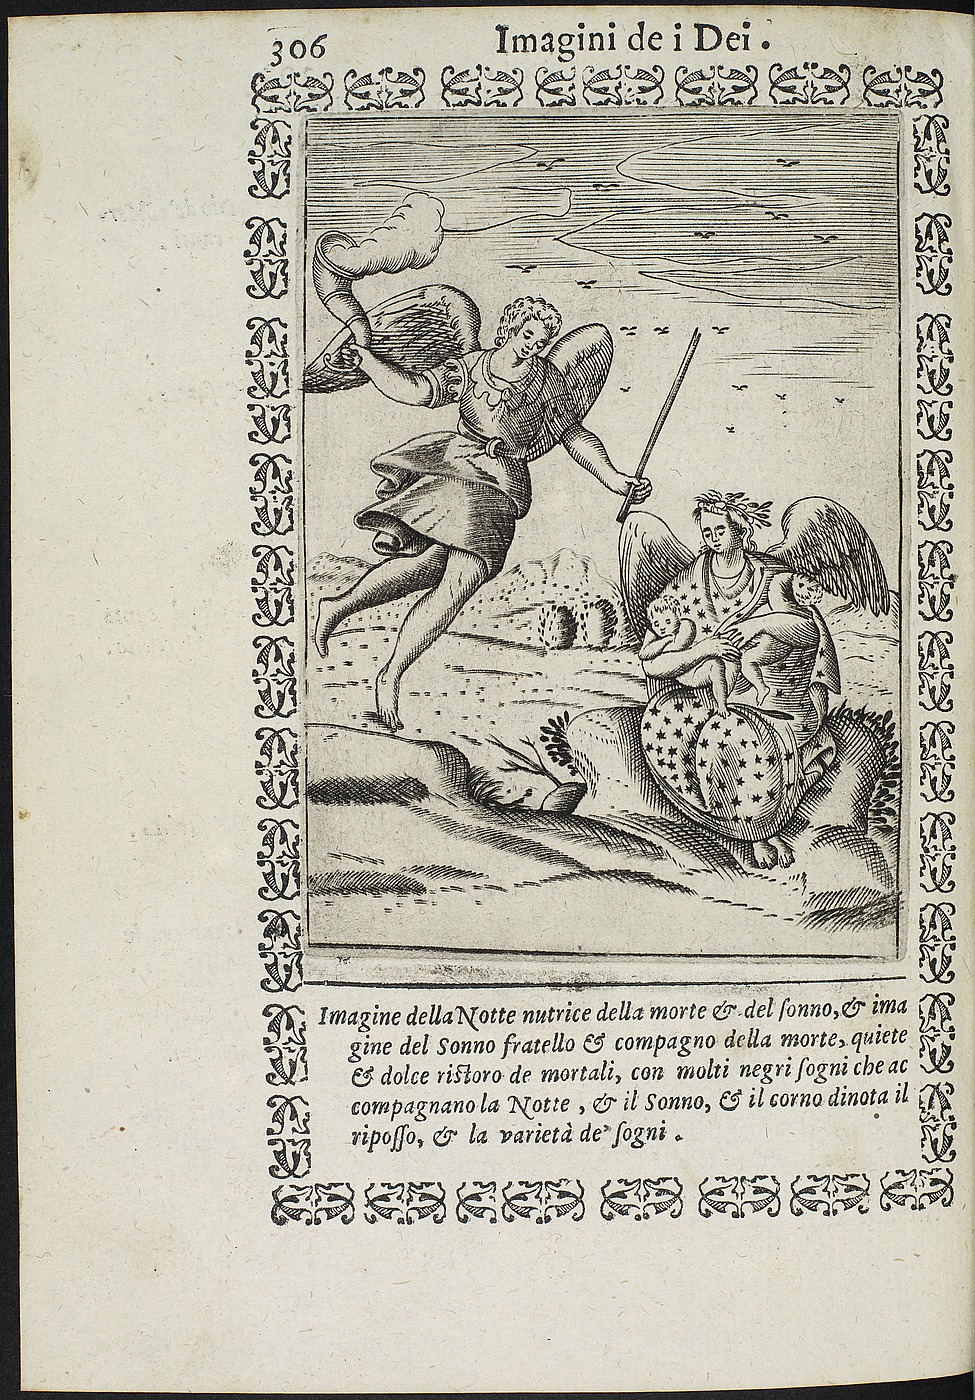 Bolognino Zaltieri: Nyx, Thanatos og Hypnos, side 306 i Vincenzo Cartari: Le imagini de i dei degli antichi, Padua, 1608